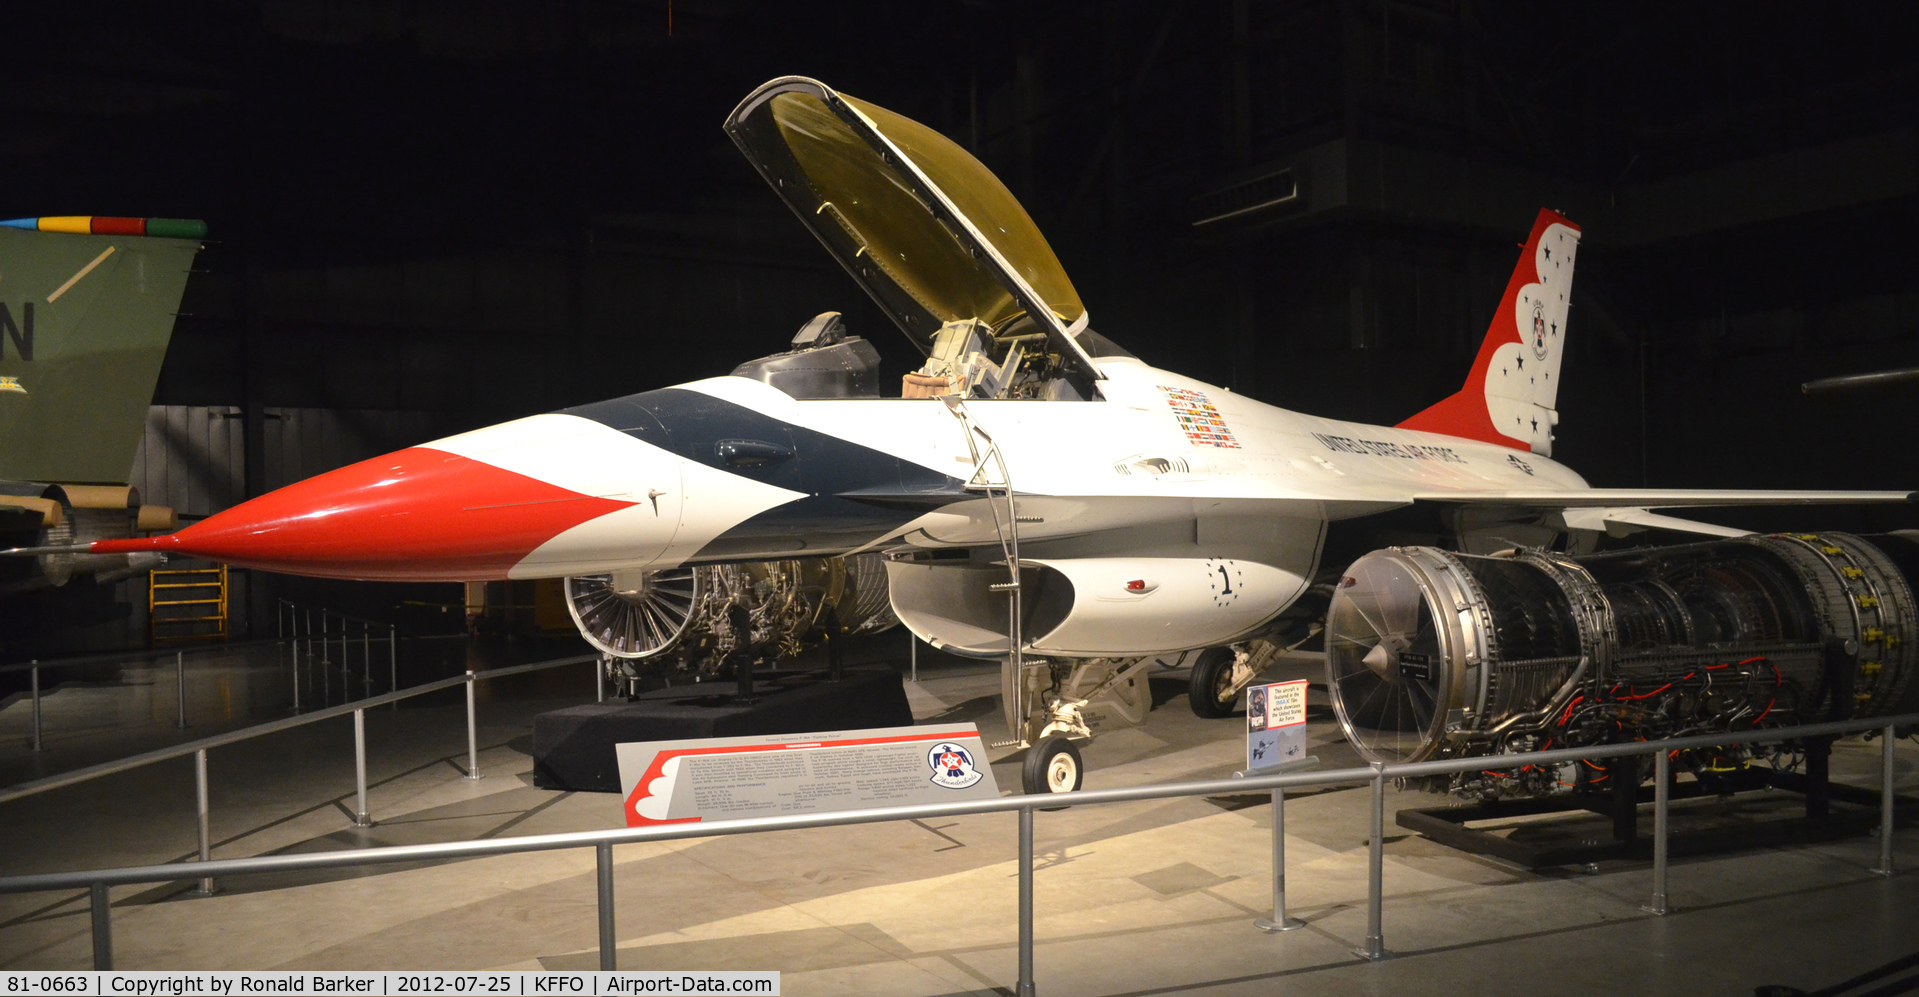 81-0663, 1981 General Dynamics F-16A Fighting Falcon C/N 61-344, AF Museum